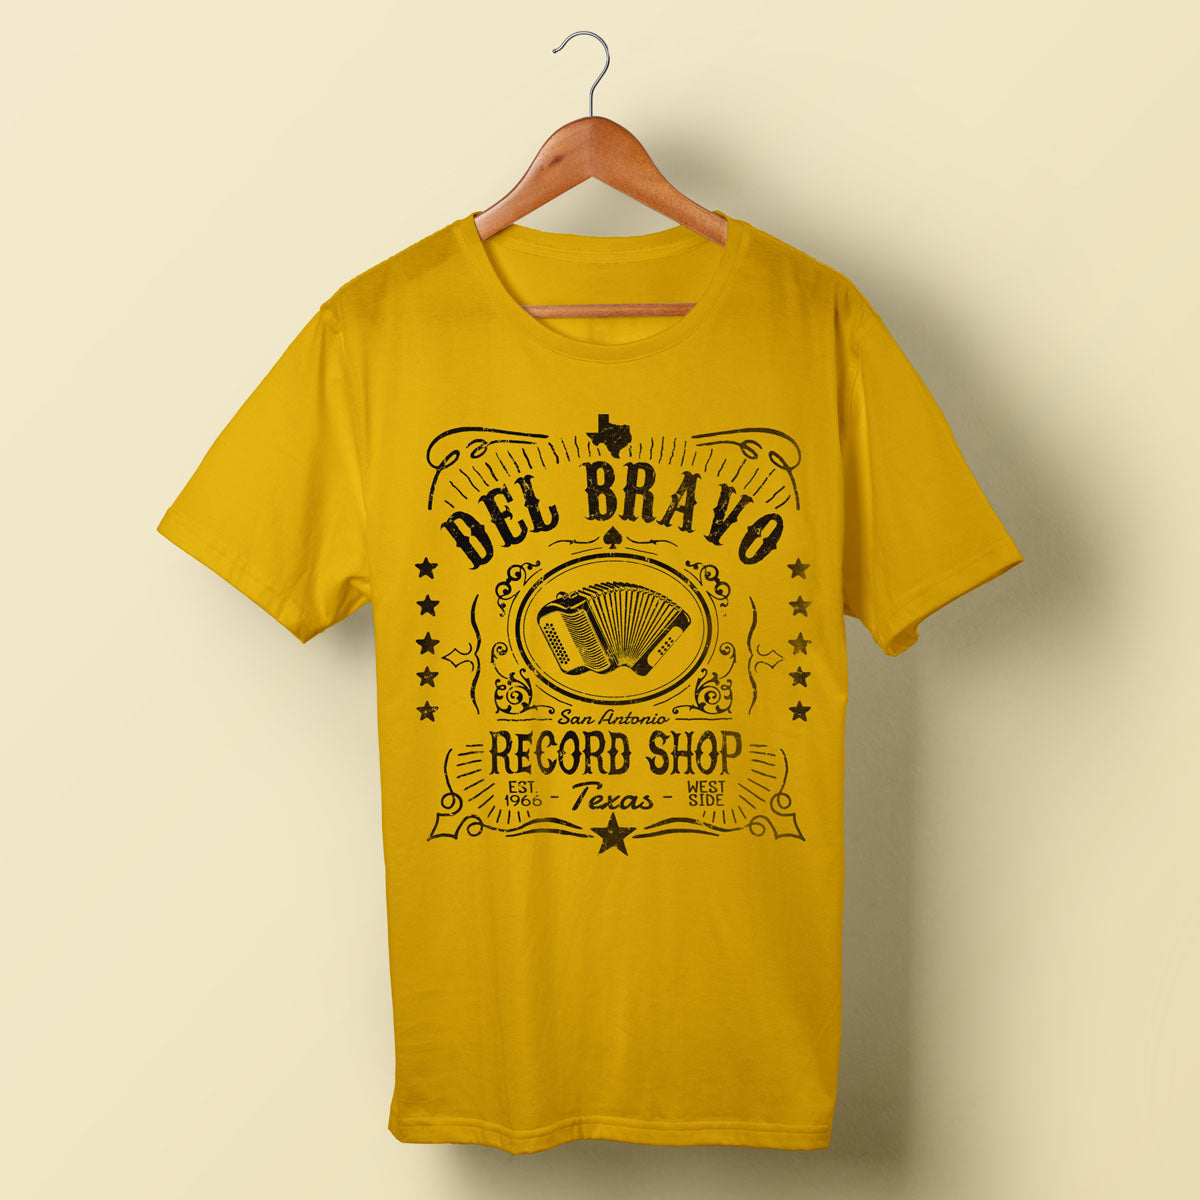 Del Bravo Record Shop Label (Mustard Yellow) T-Shirt DLB MERCH